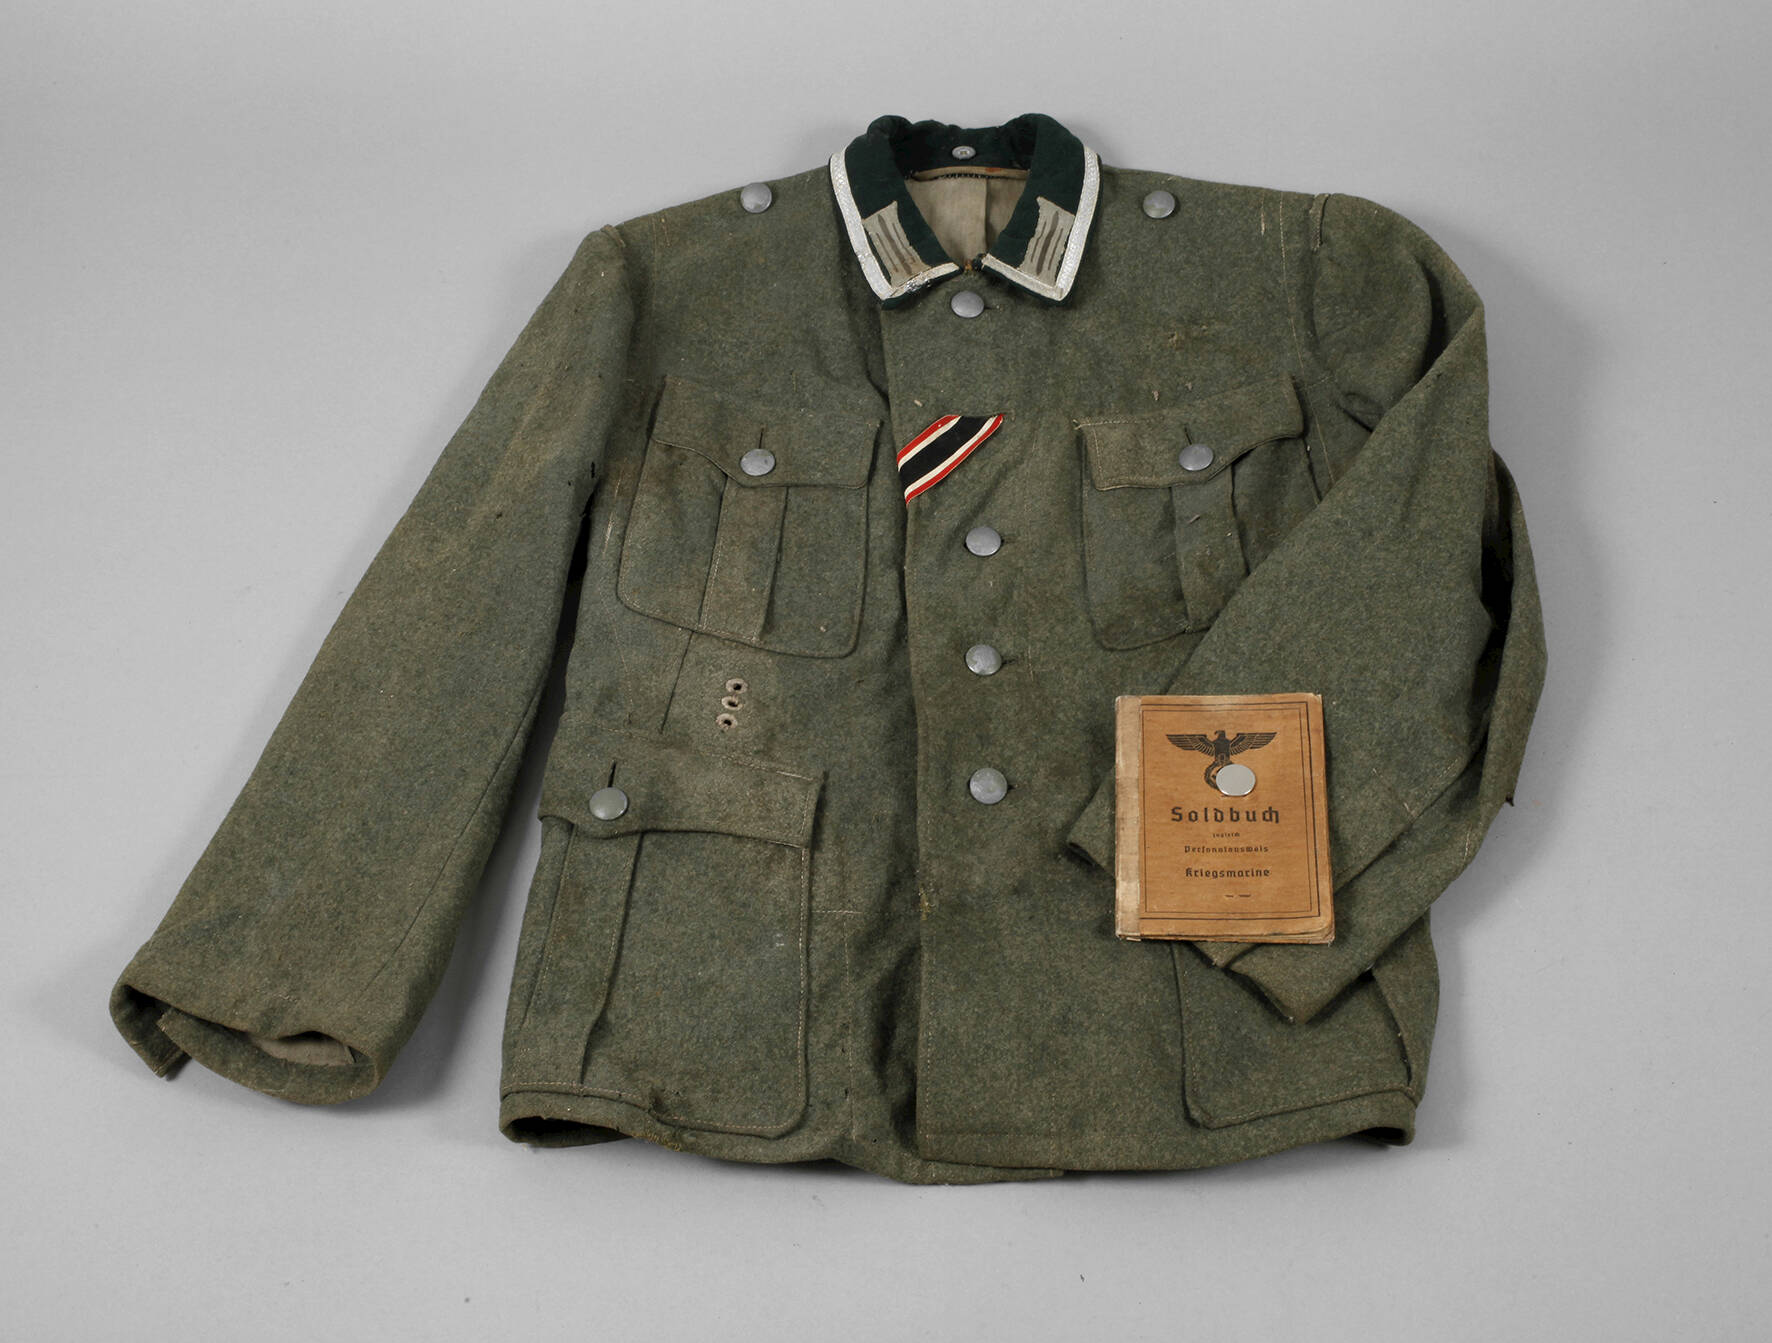 Uniformjacke 2. Weltkrieg